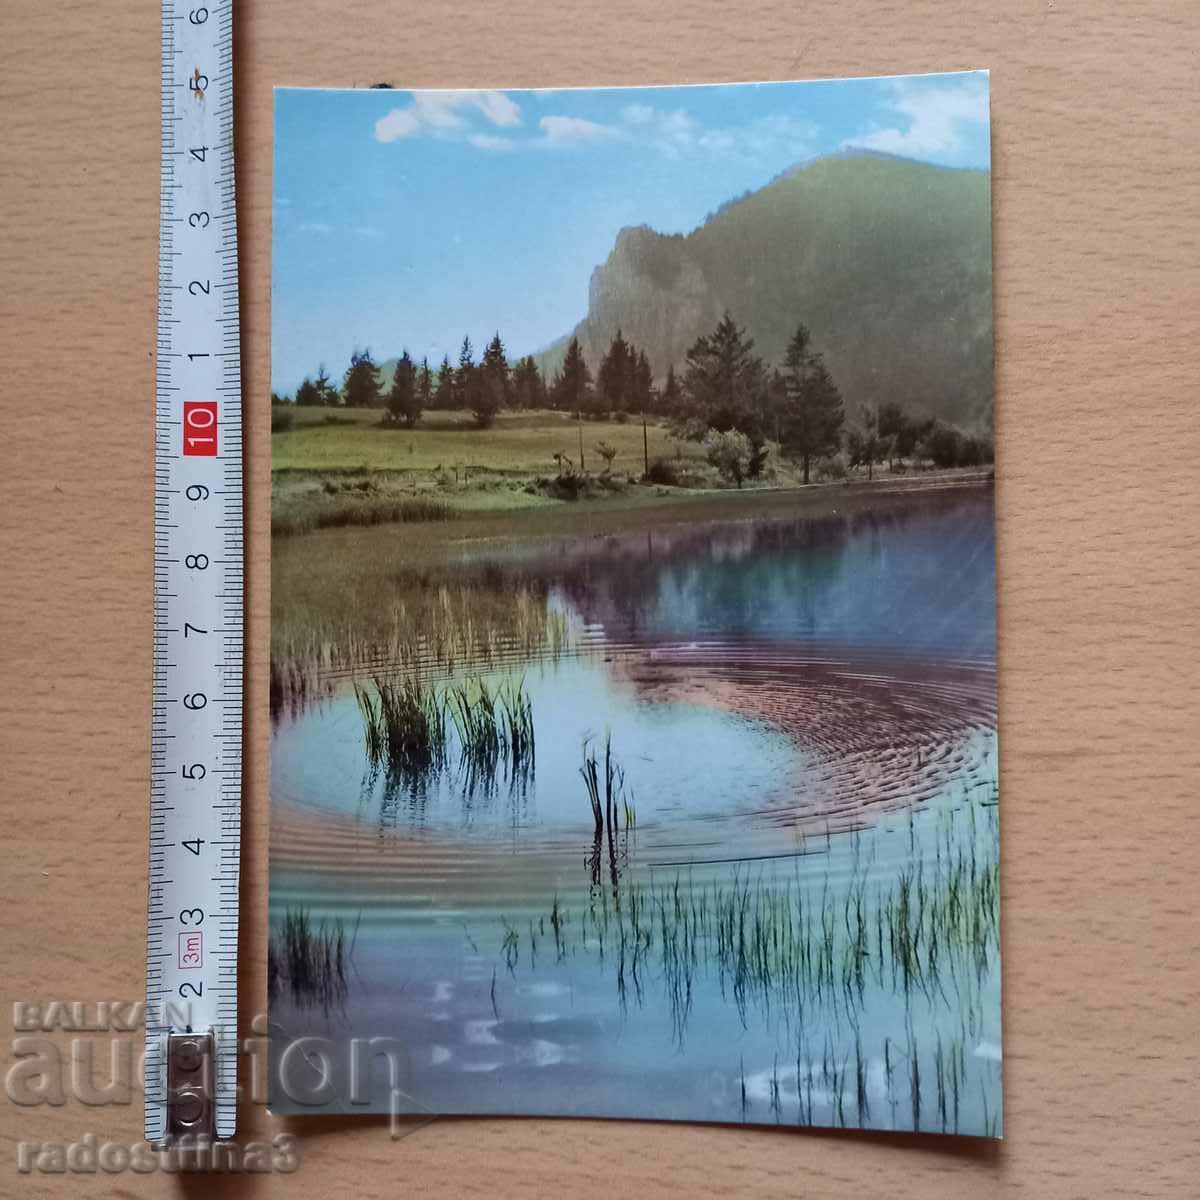 Card from the Rhodopes Landscape near Smolyan